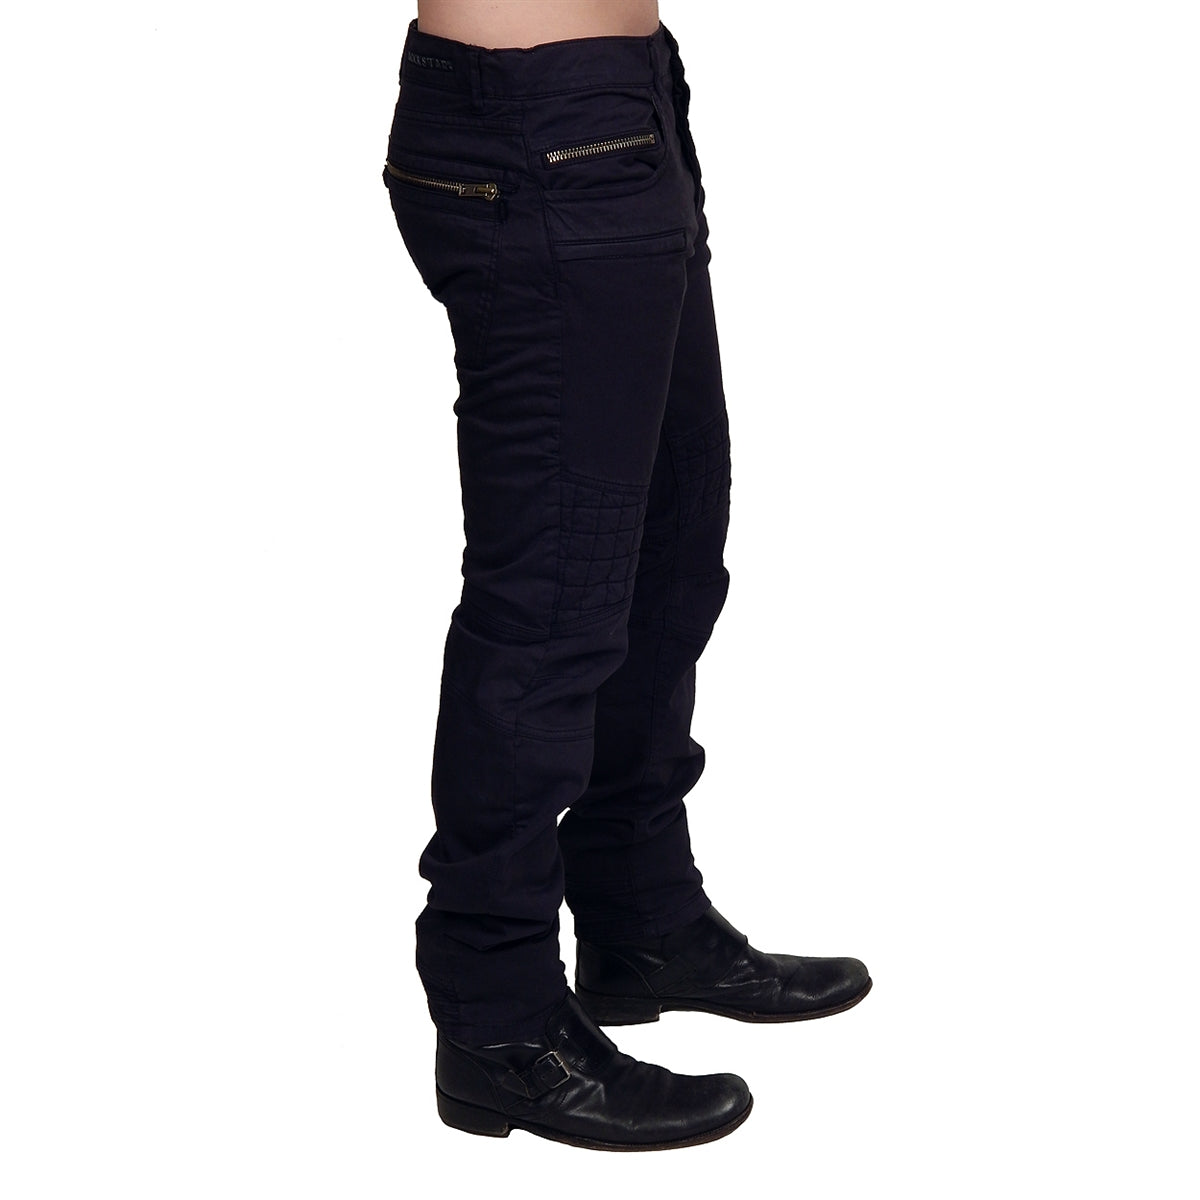 ROCKSTAR SUSHI Faded Blue Moto Cargo Pants Jeans Mens Size 40 Inseam 29